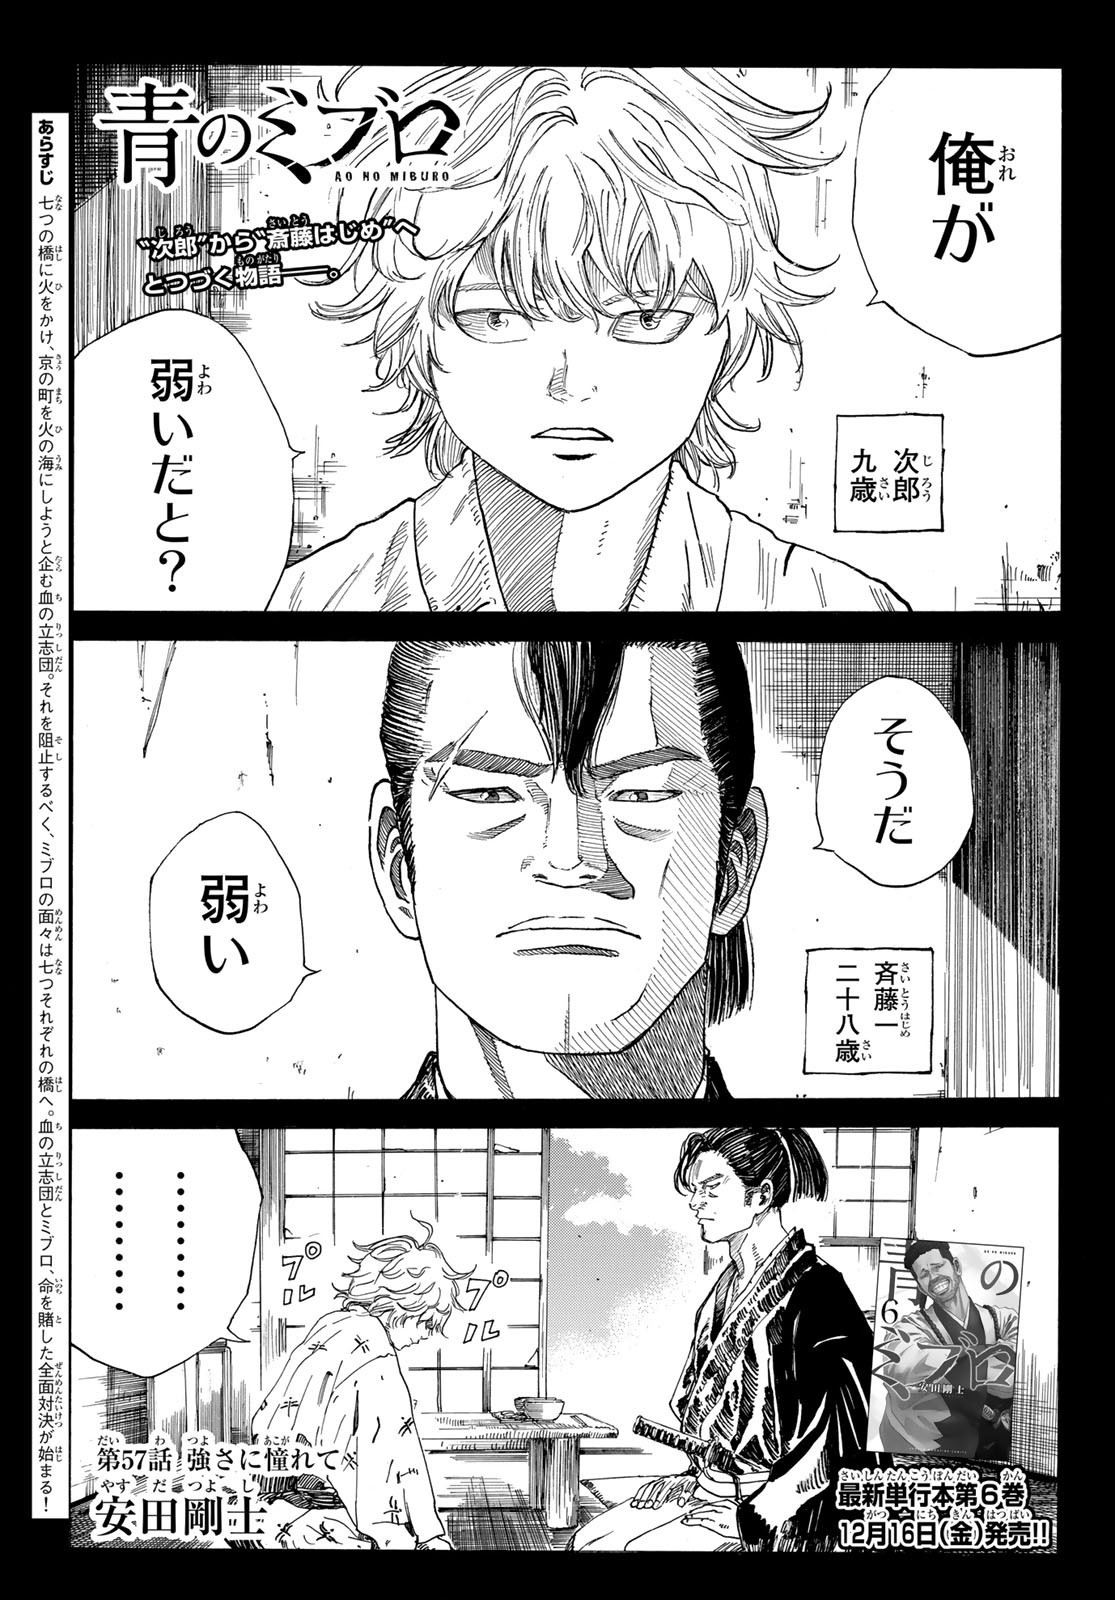 Ao no Miburo - Chapter 057 - Page 1